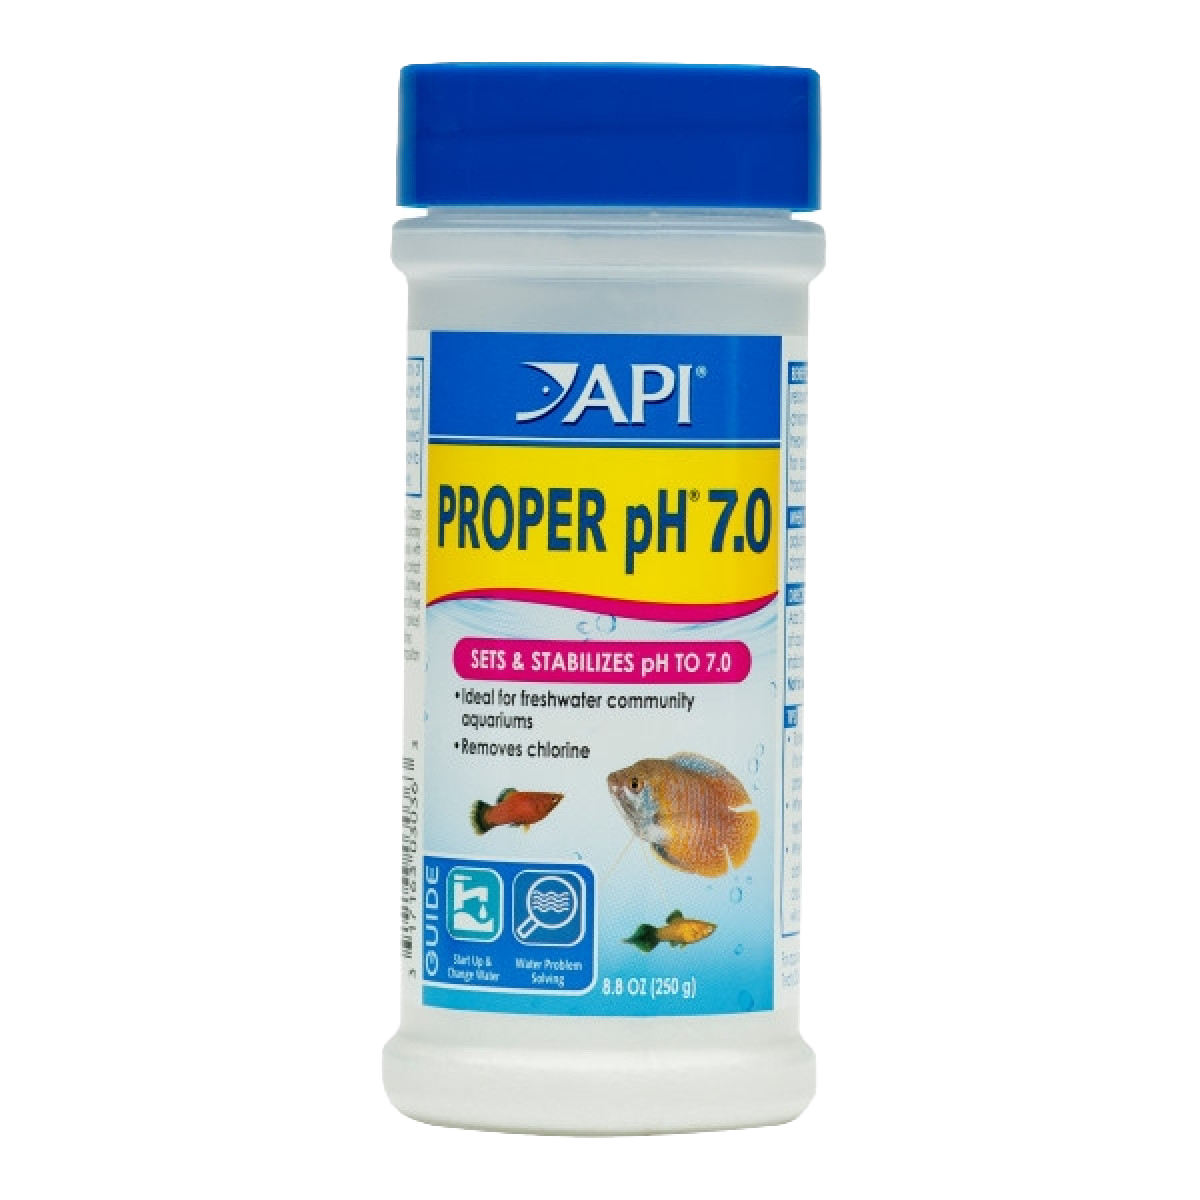 API Proper pH 7.0 Powder